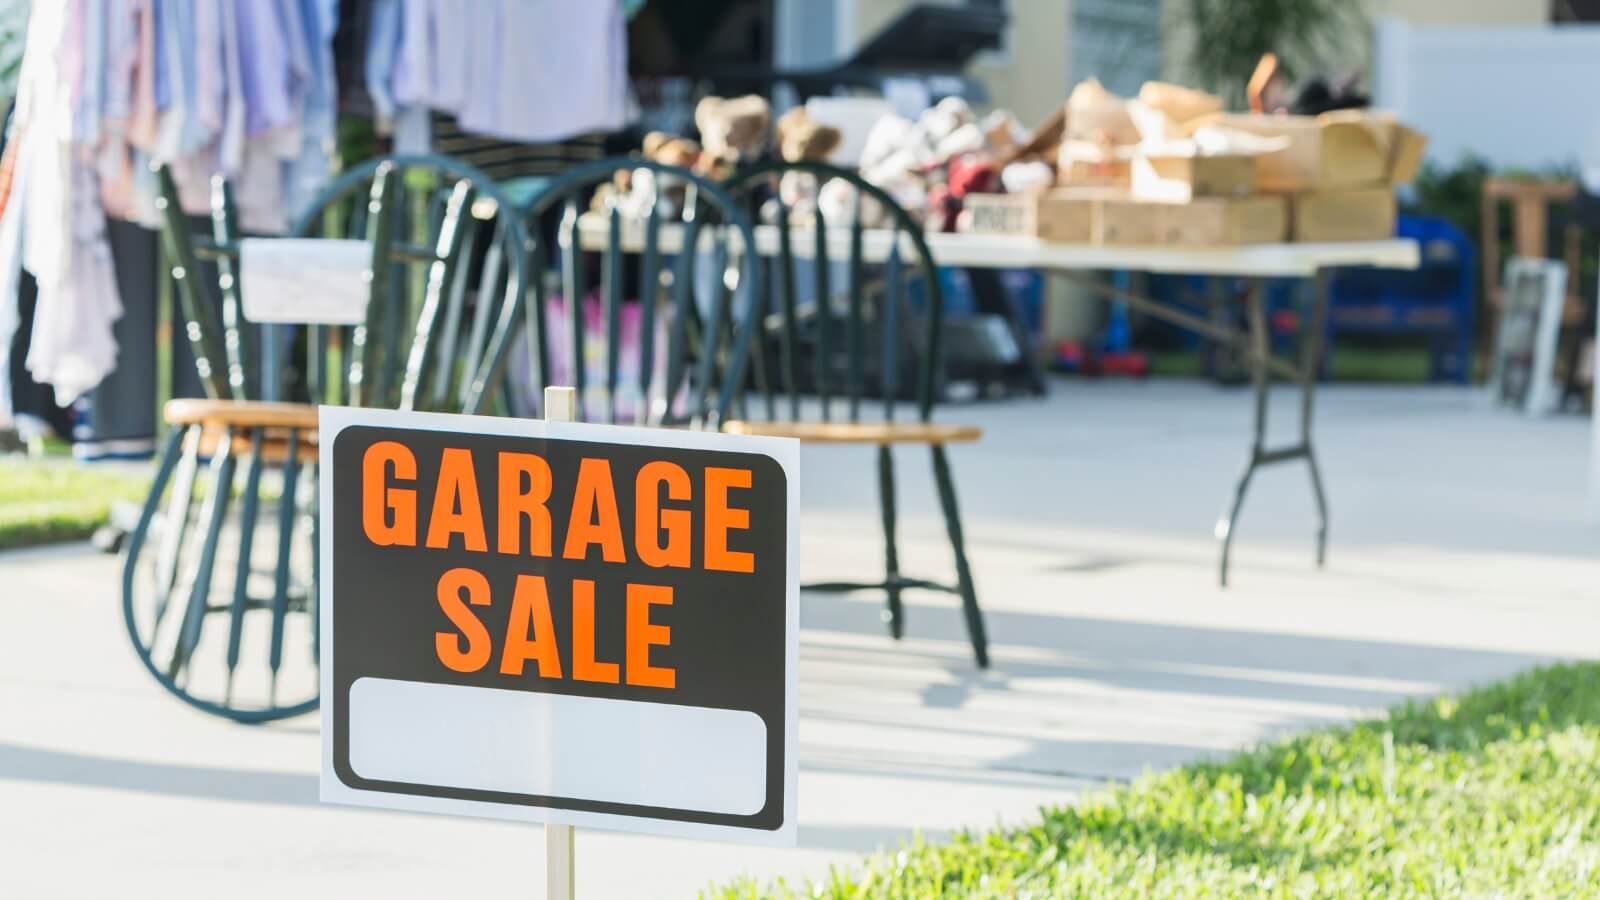 Garage Sale sign at garage sale